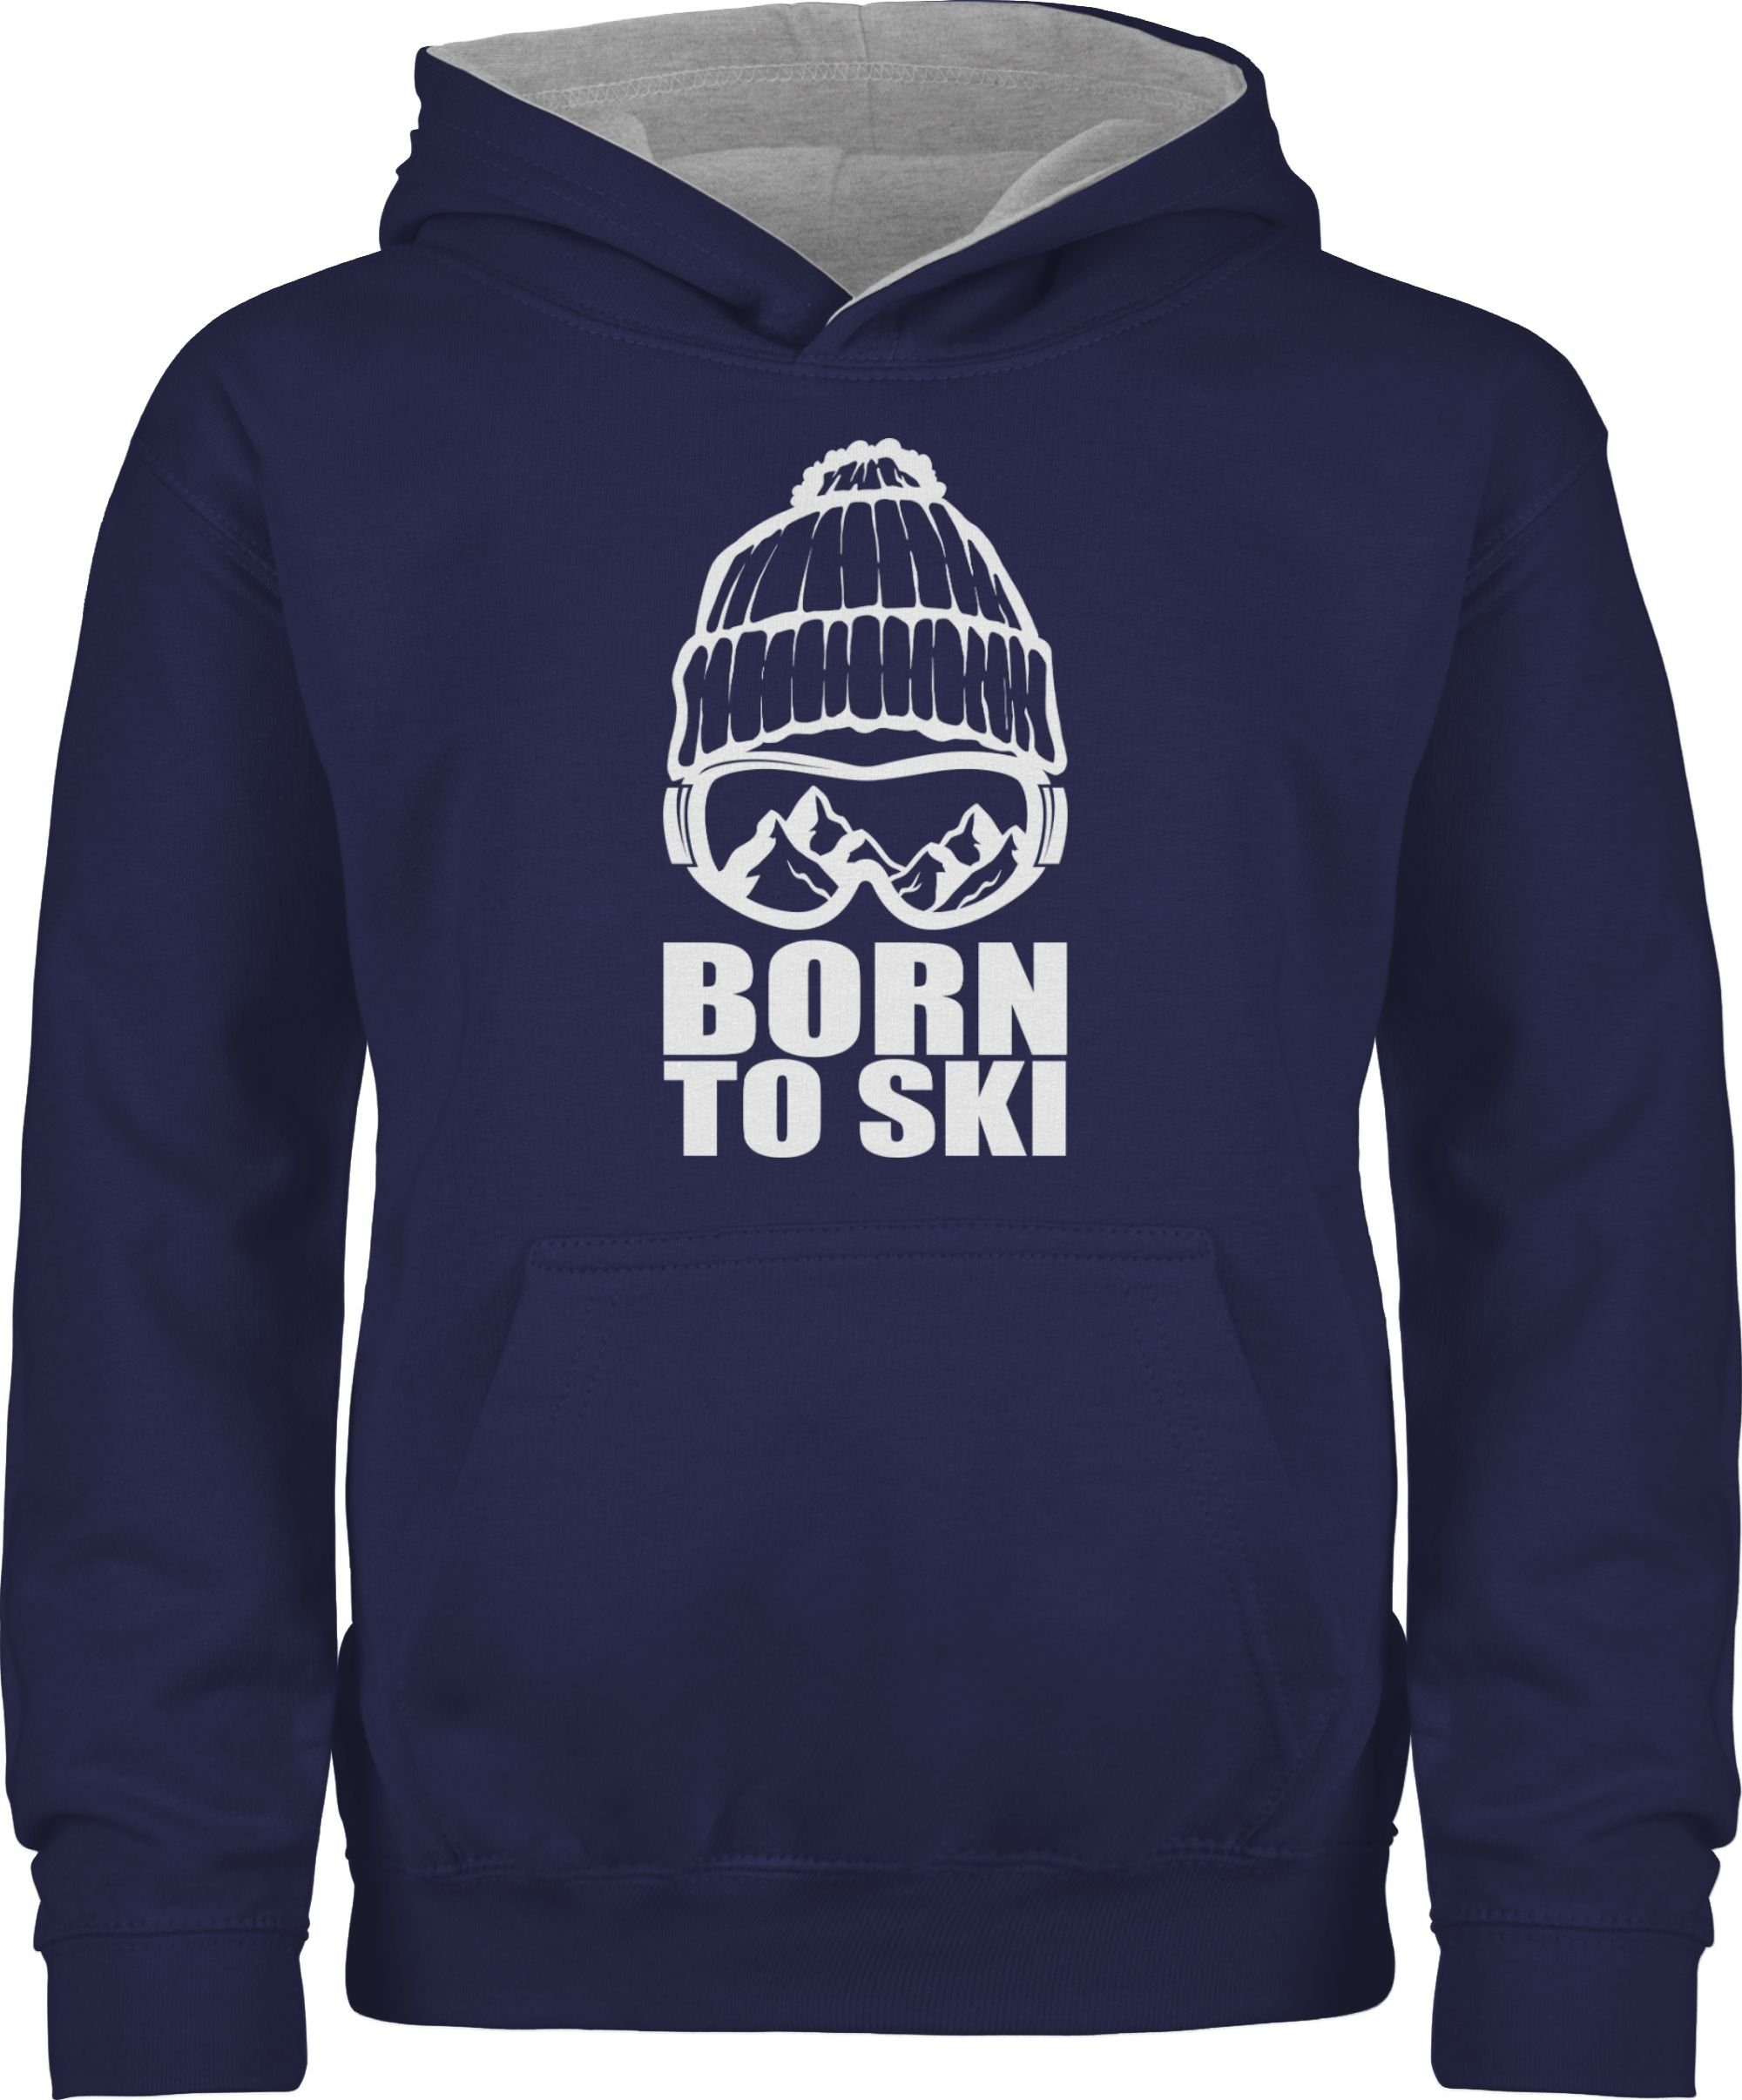 Shirtracer Hoodie Born to Ski Kinder Sport Kleidung 1 Navy Blau/Grau meliert